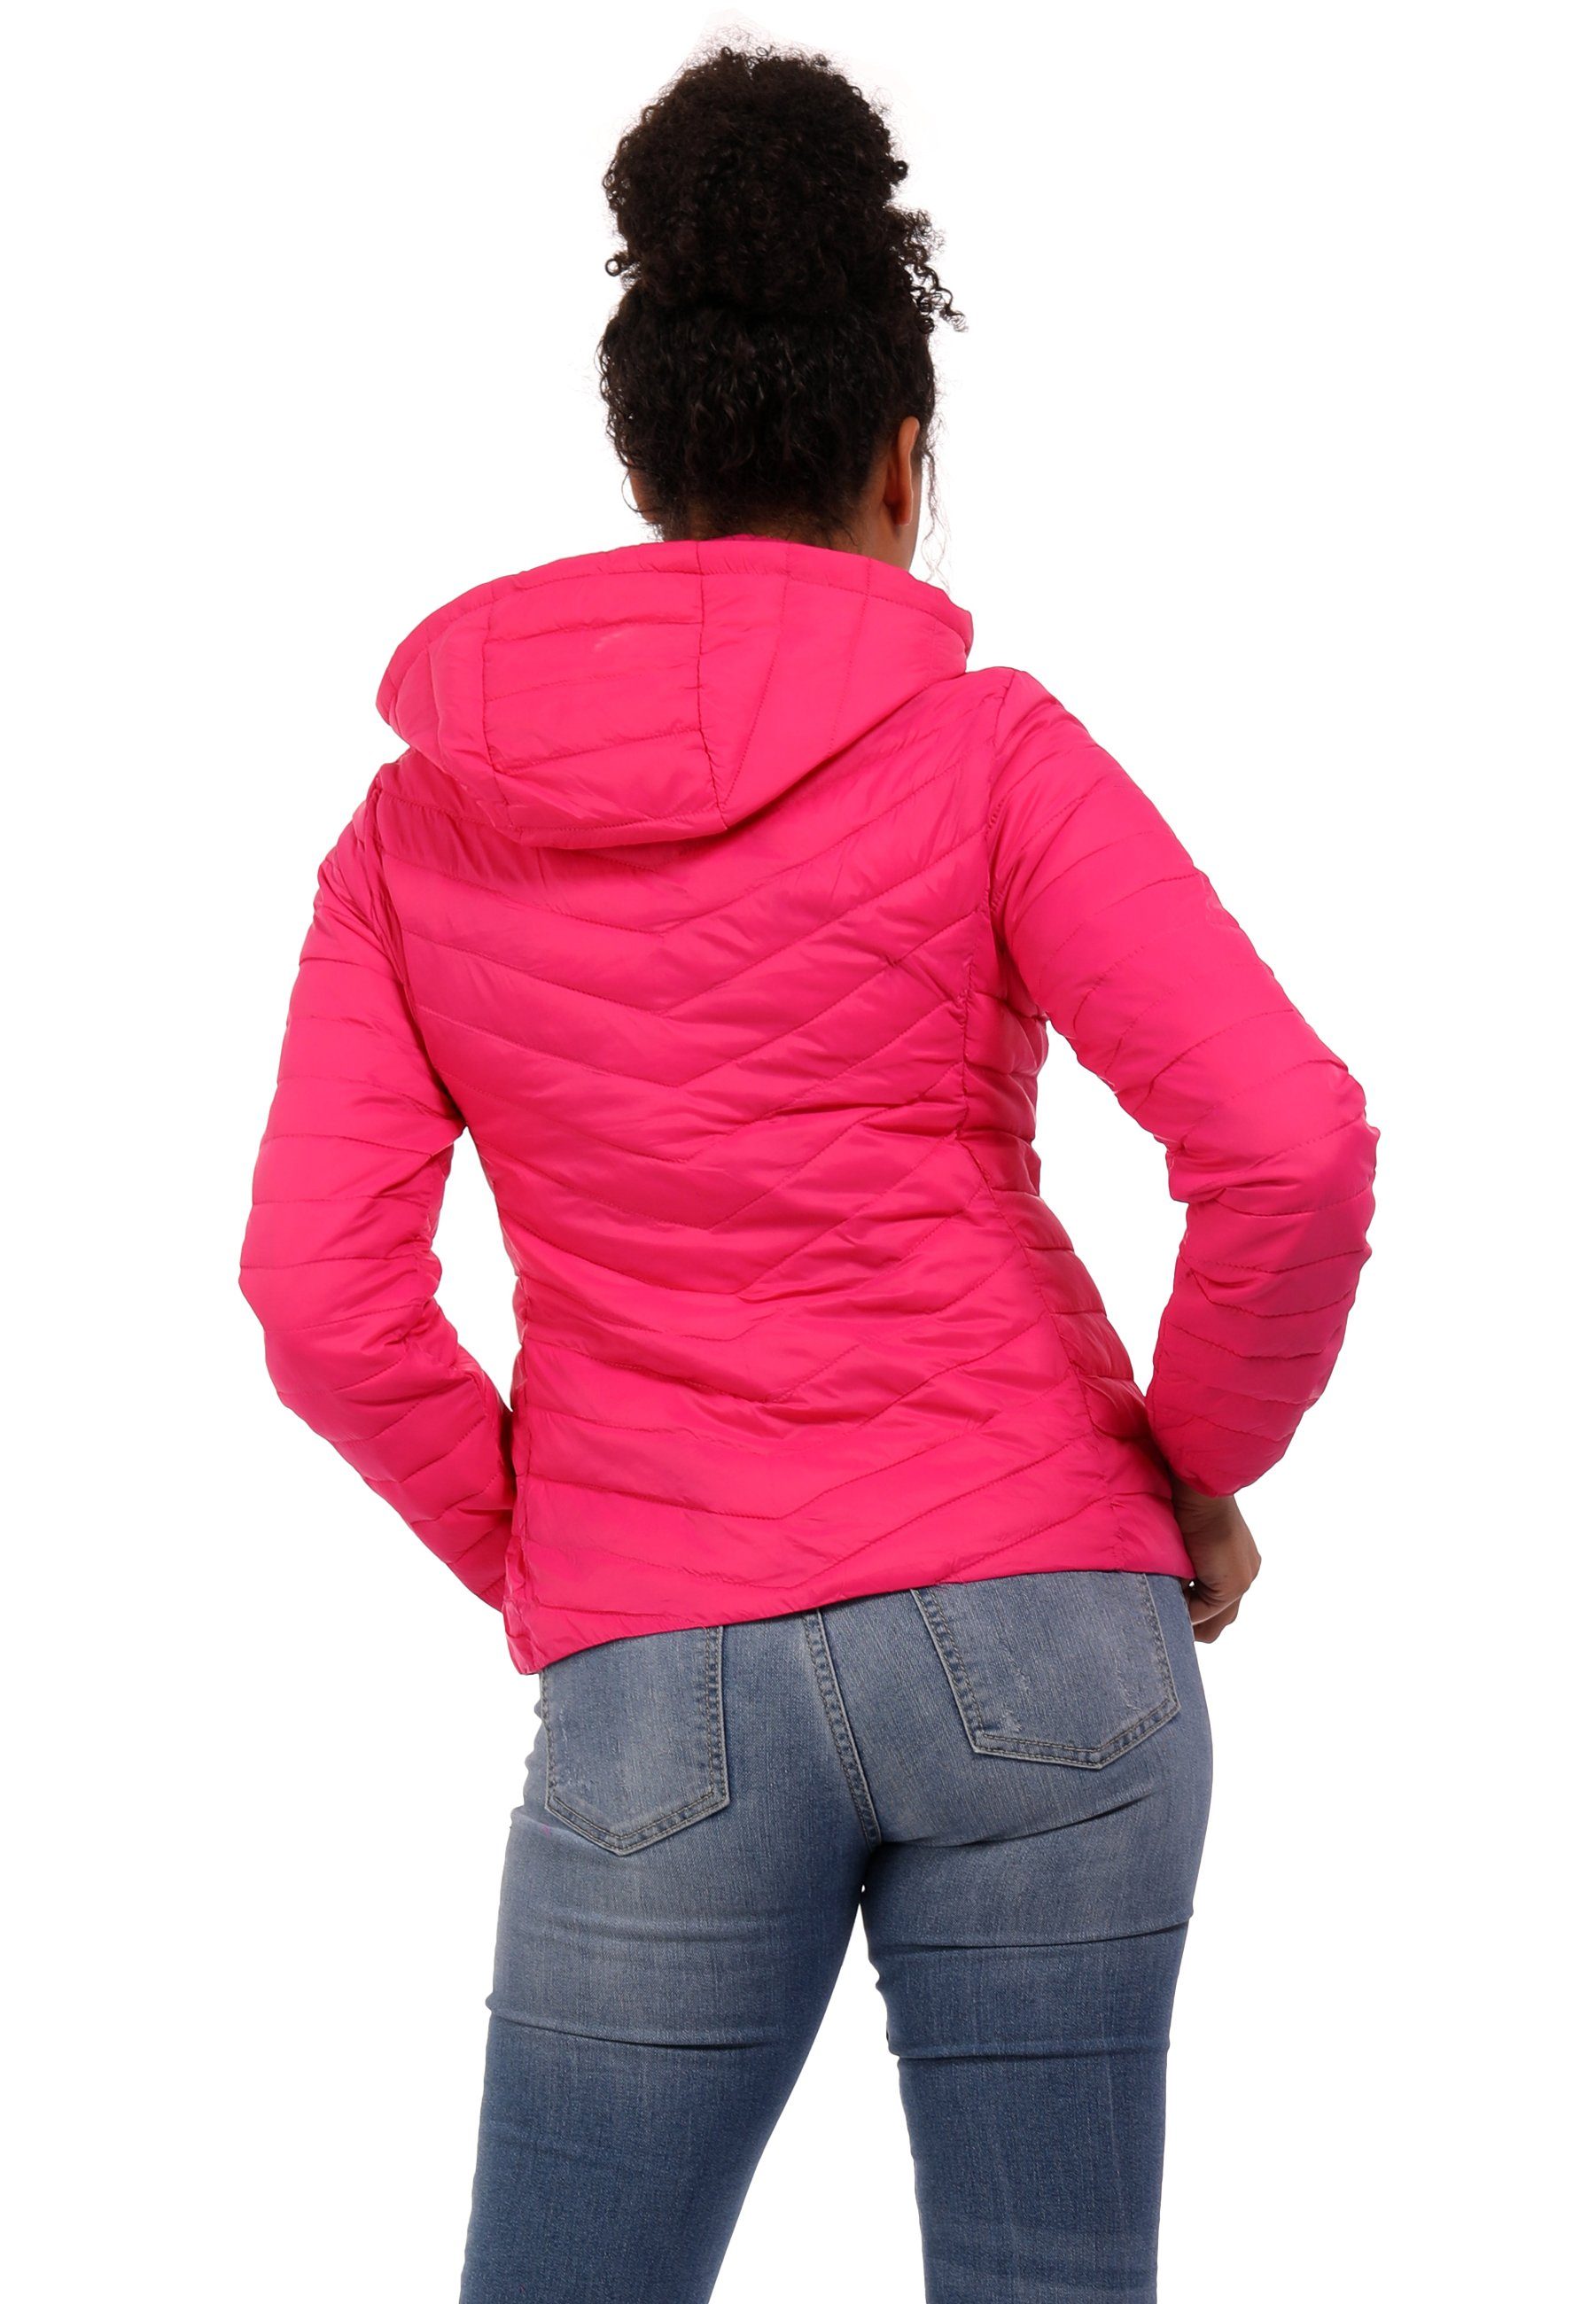 Steppjacke Fashion mit pink Übergangsjacke & mit YC (1-St) Stehkragen Steppjacke casual, Style Kapuze, Leichte Kapuze mit